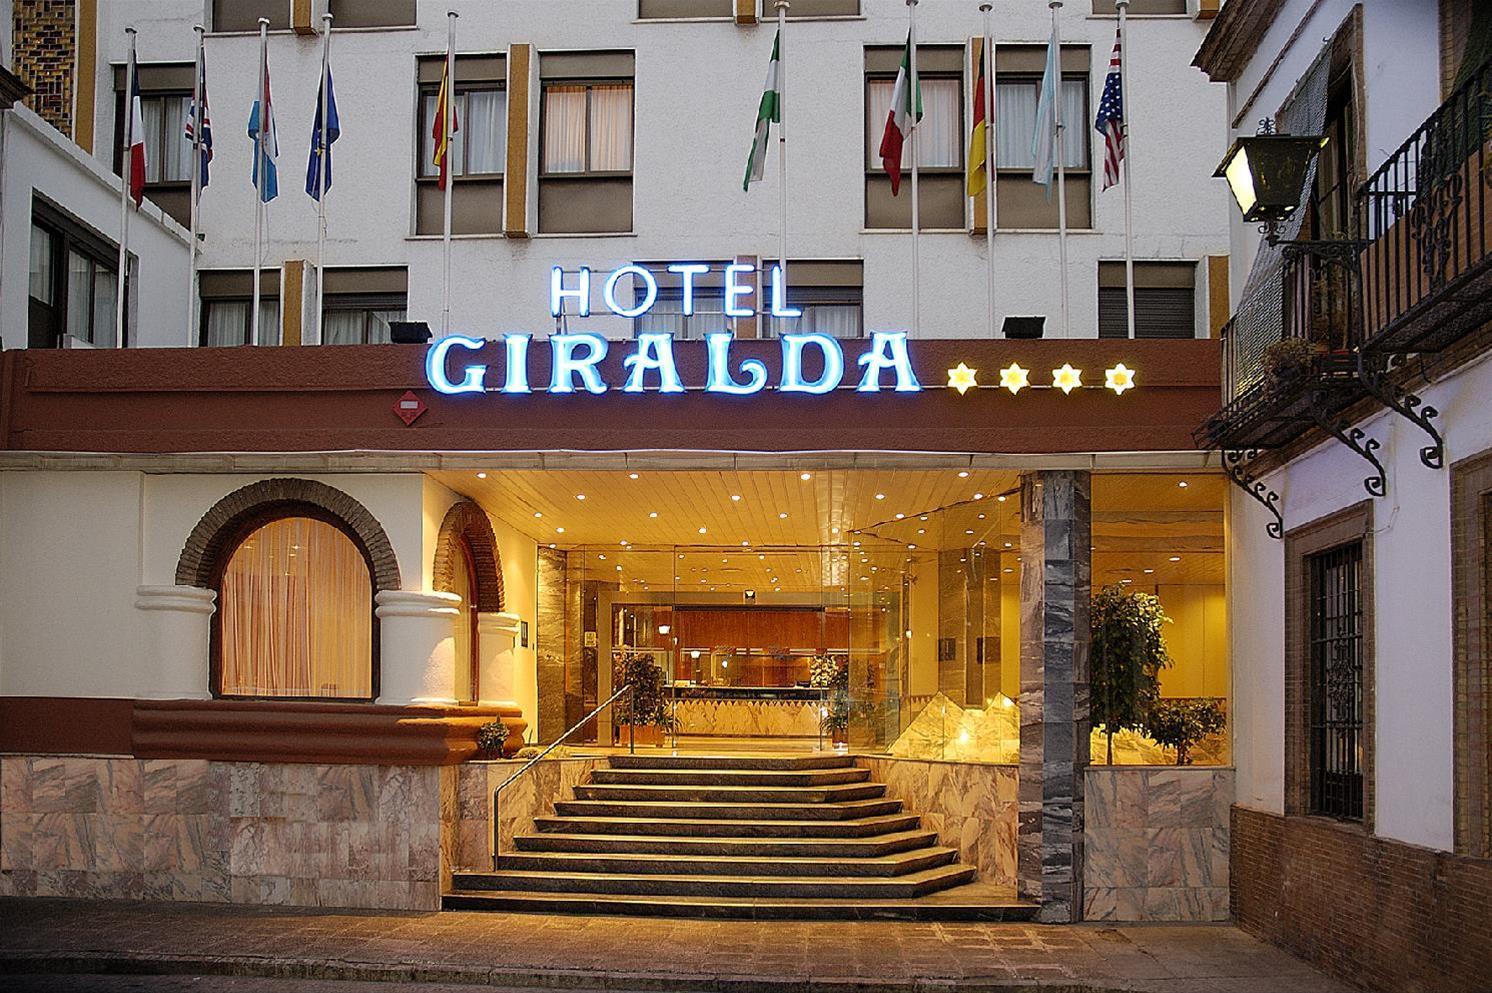 Catalonia Giralda Hotel Seville Exterior photo